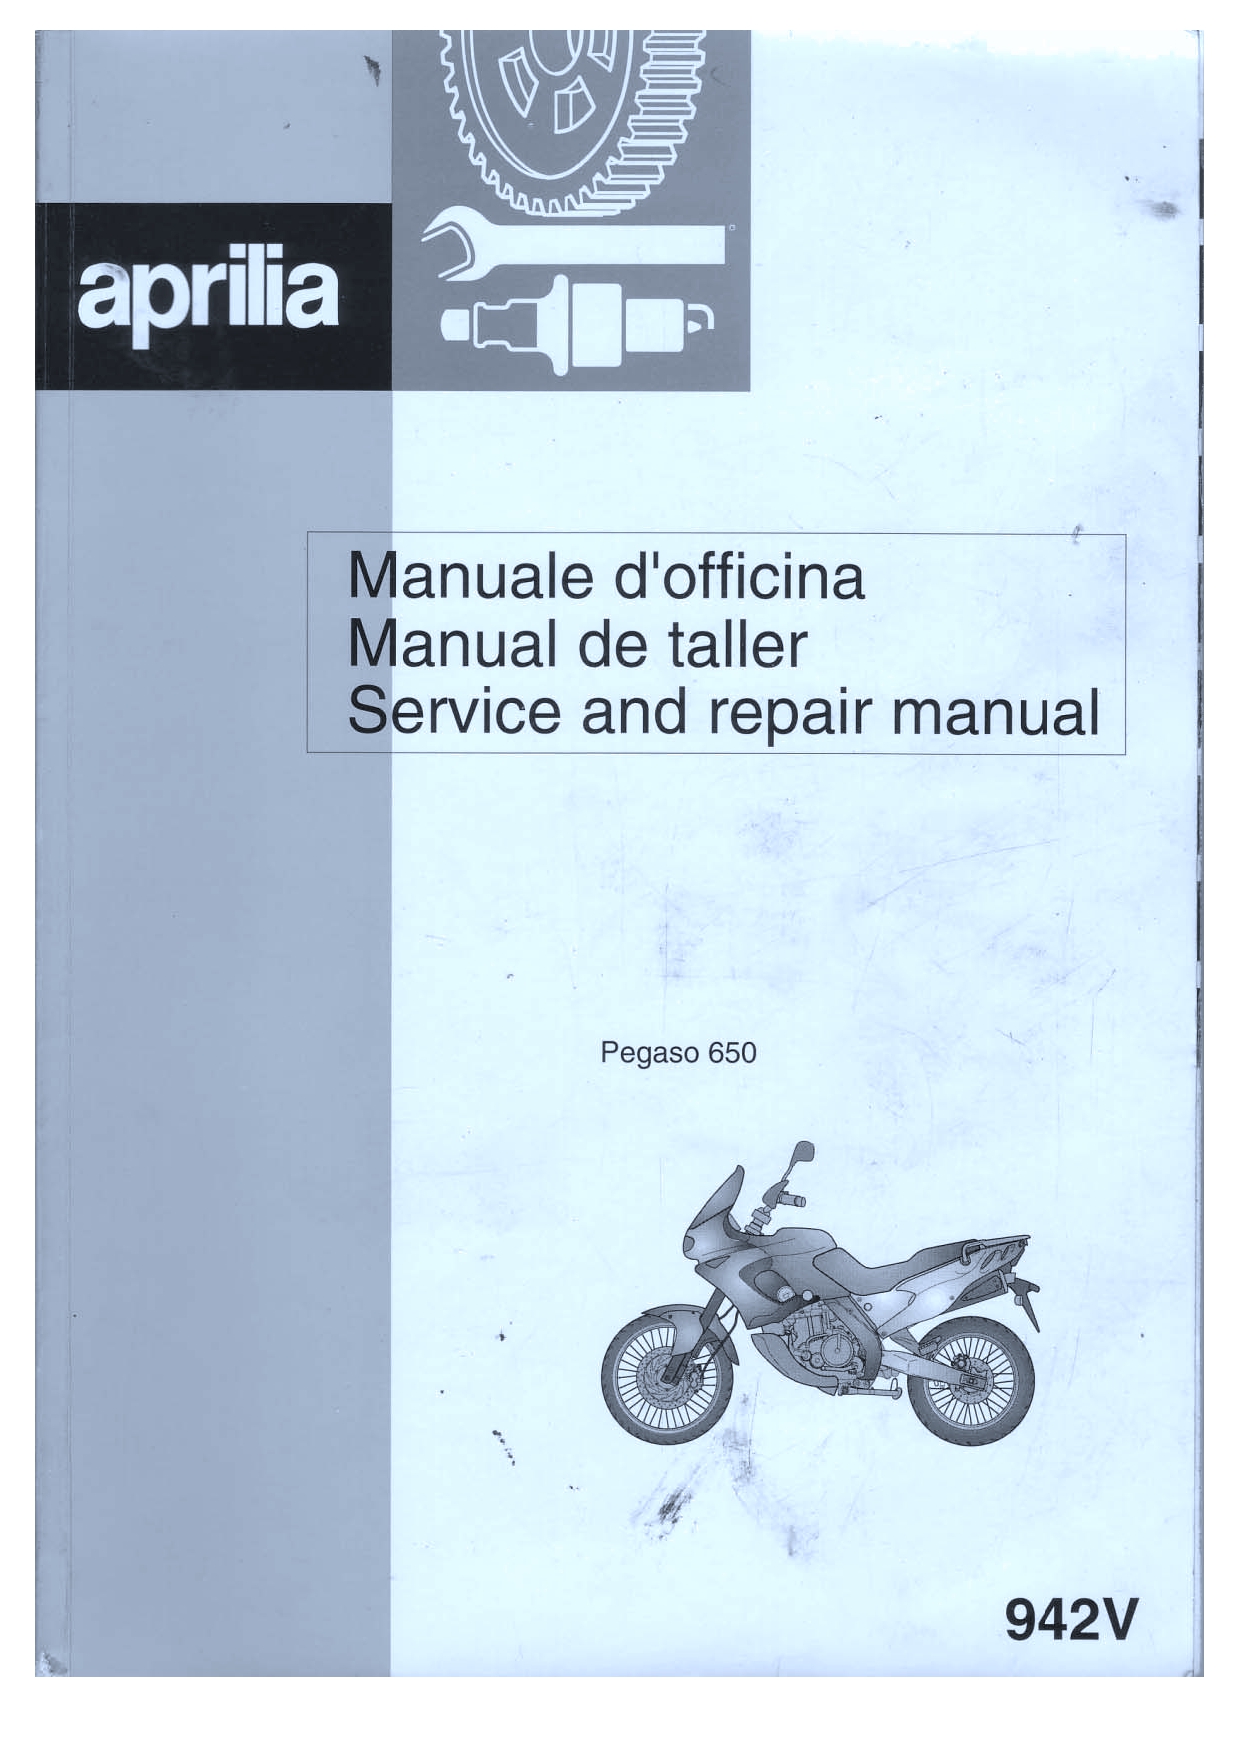 Service Manual Aprilia Pegaso 650 642V PDF Download - Service manual